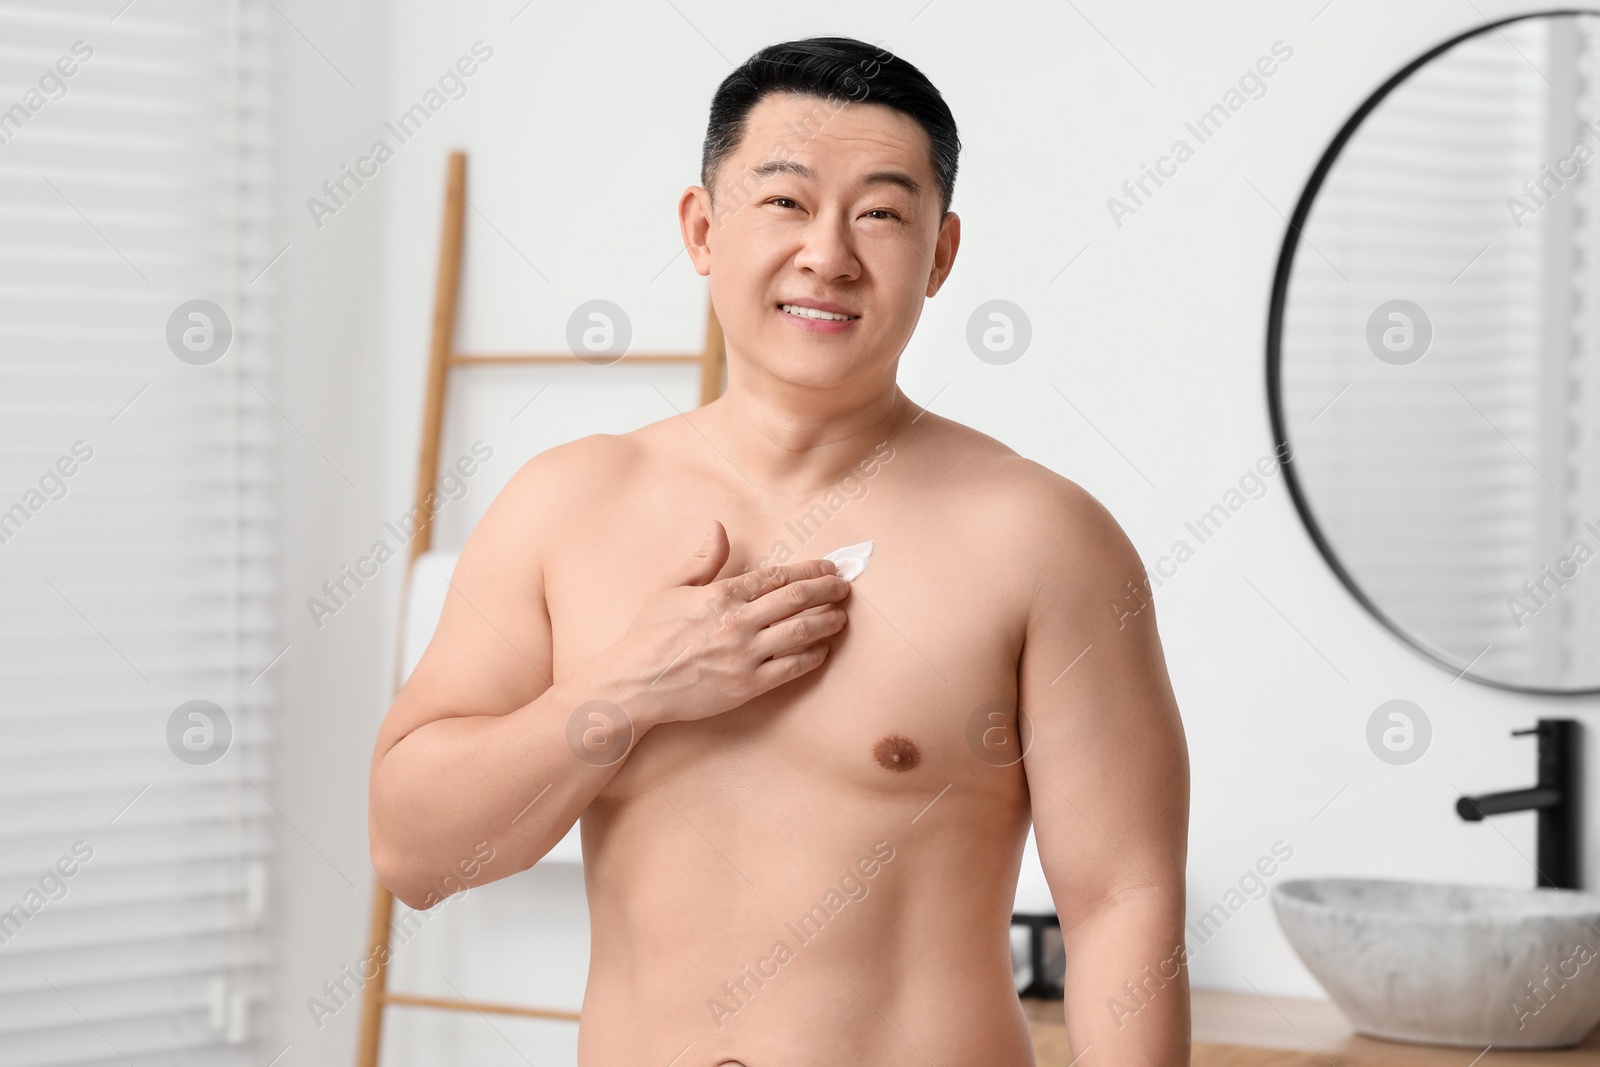 Photo of Handsome man applying body cream onto his chest in bathroom